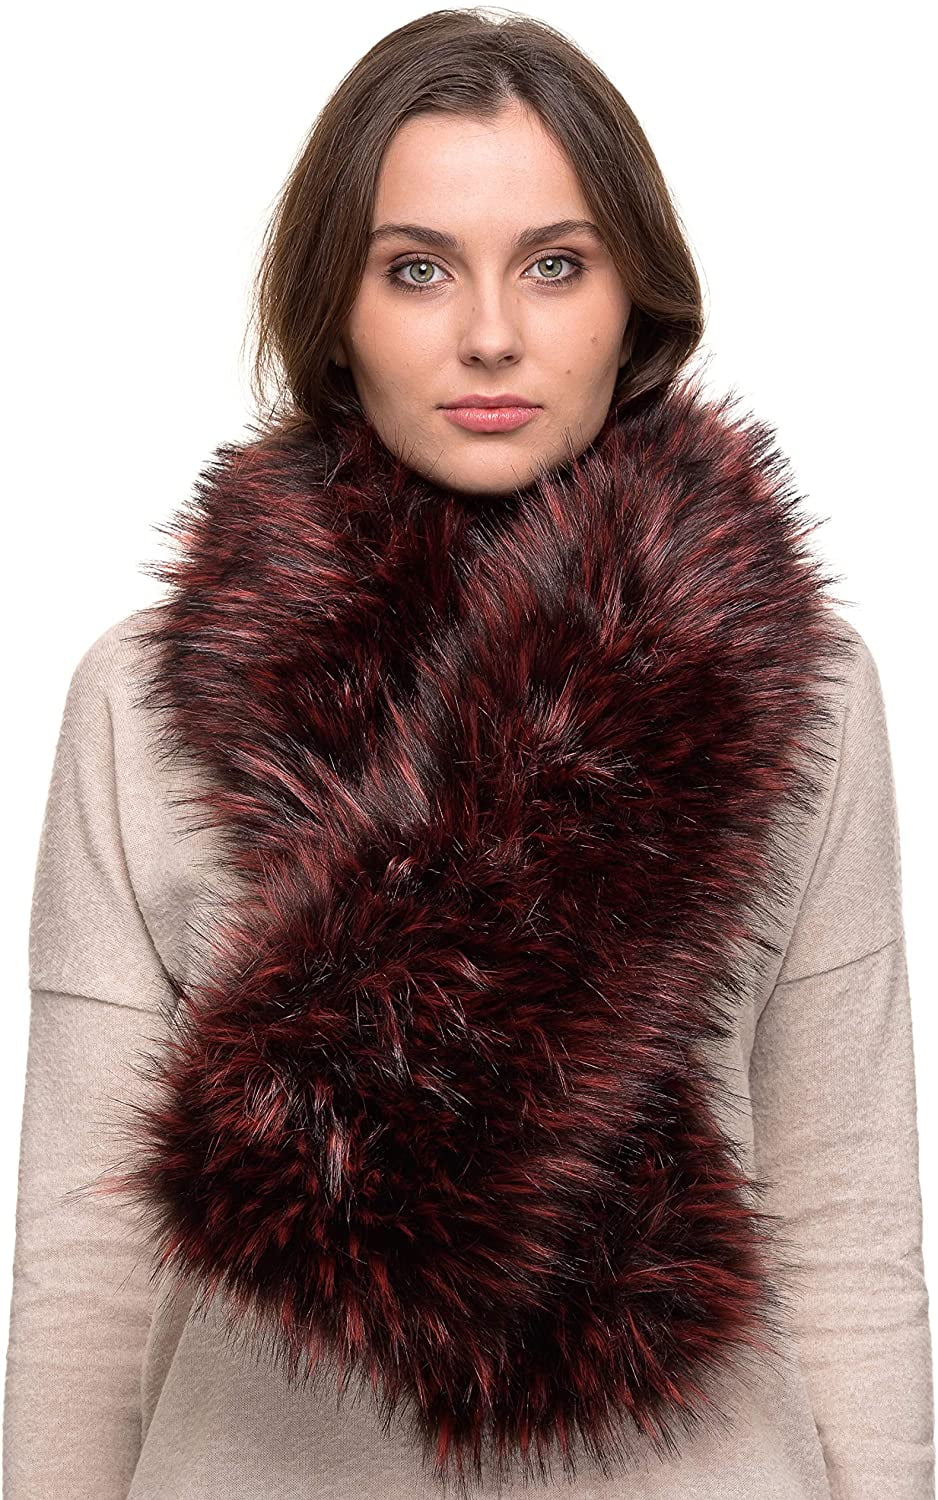 Qmfur Faux Raccoon Fur Collar Womens Neck Warmer Scarf Wrap